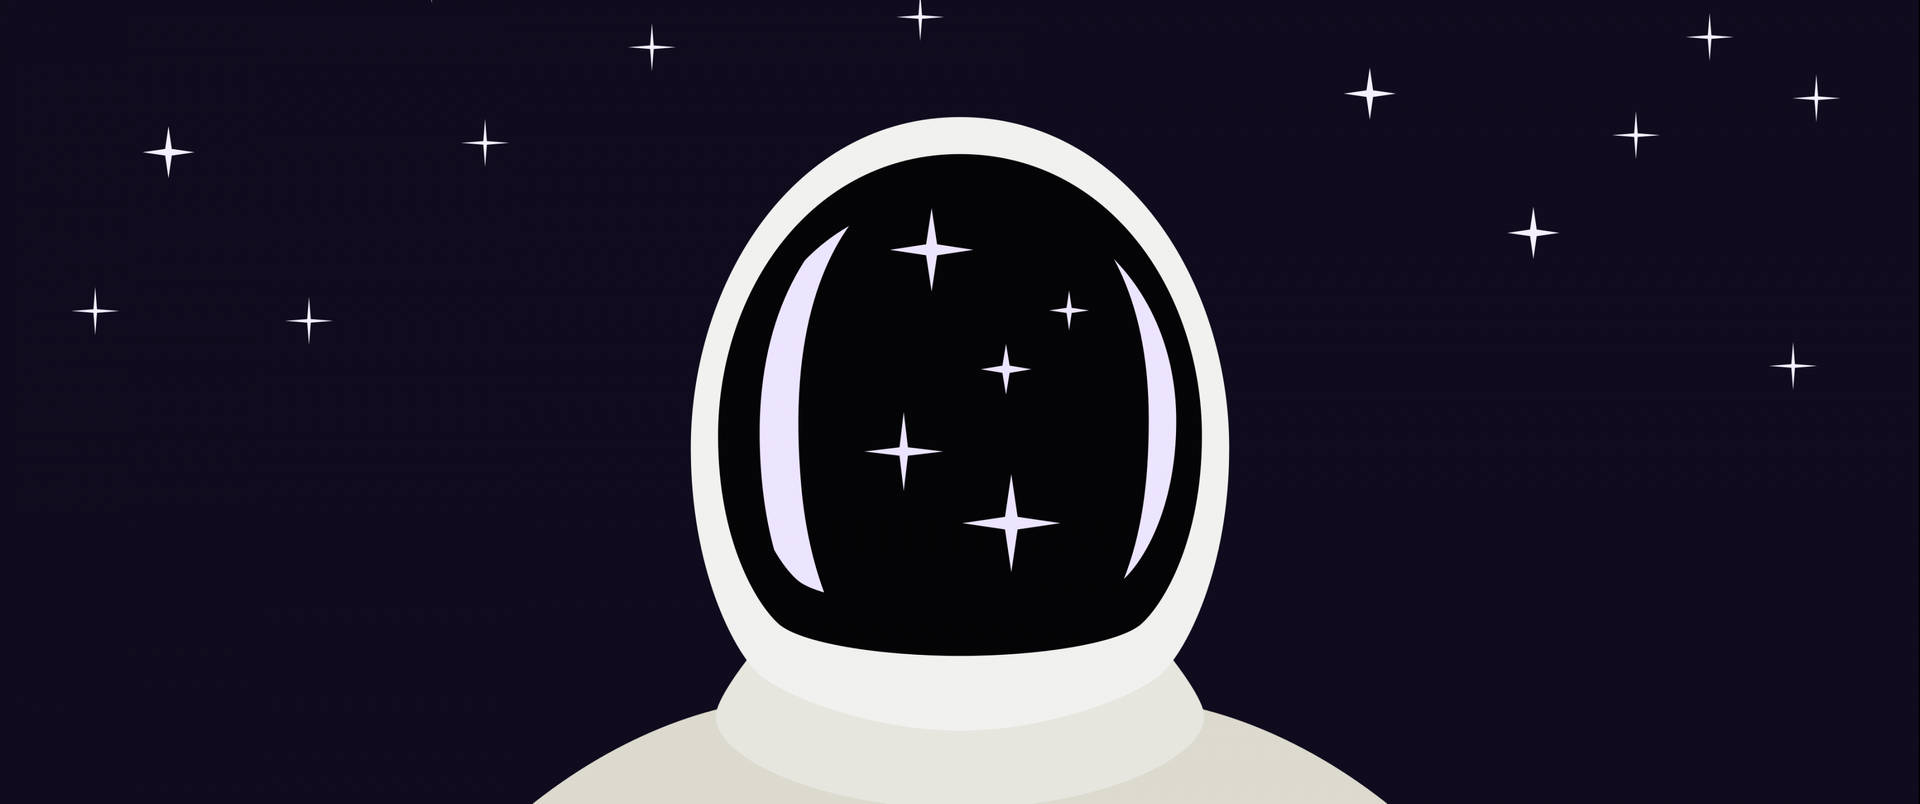 Black And White Astronaut Face Shield Design Wallpaper